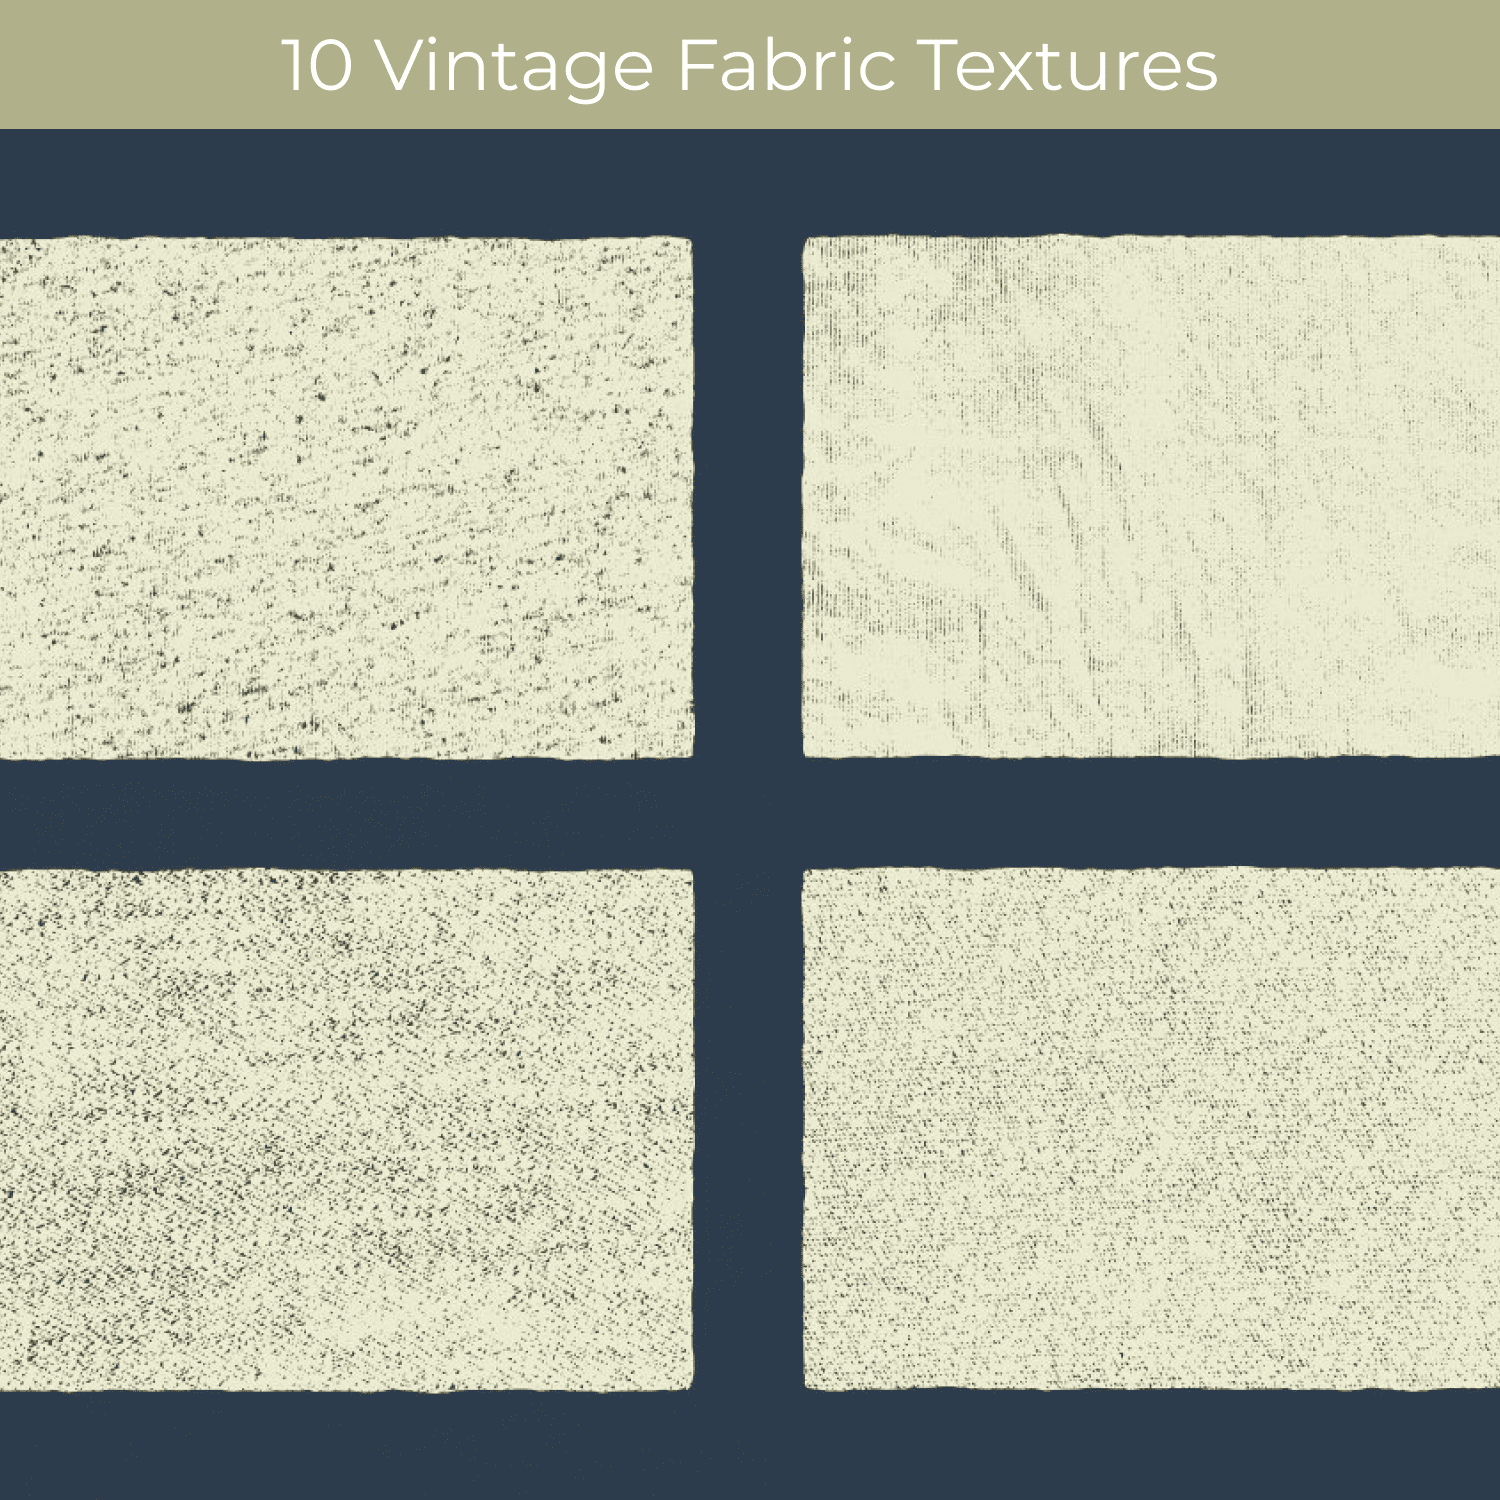 10 Vintage Fabric Textures.